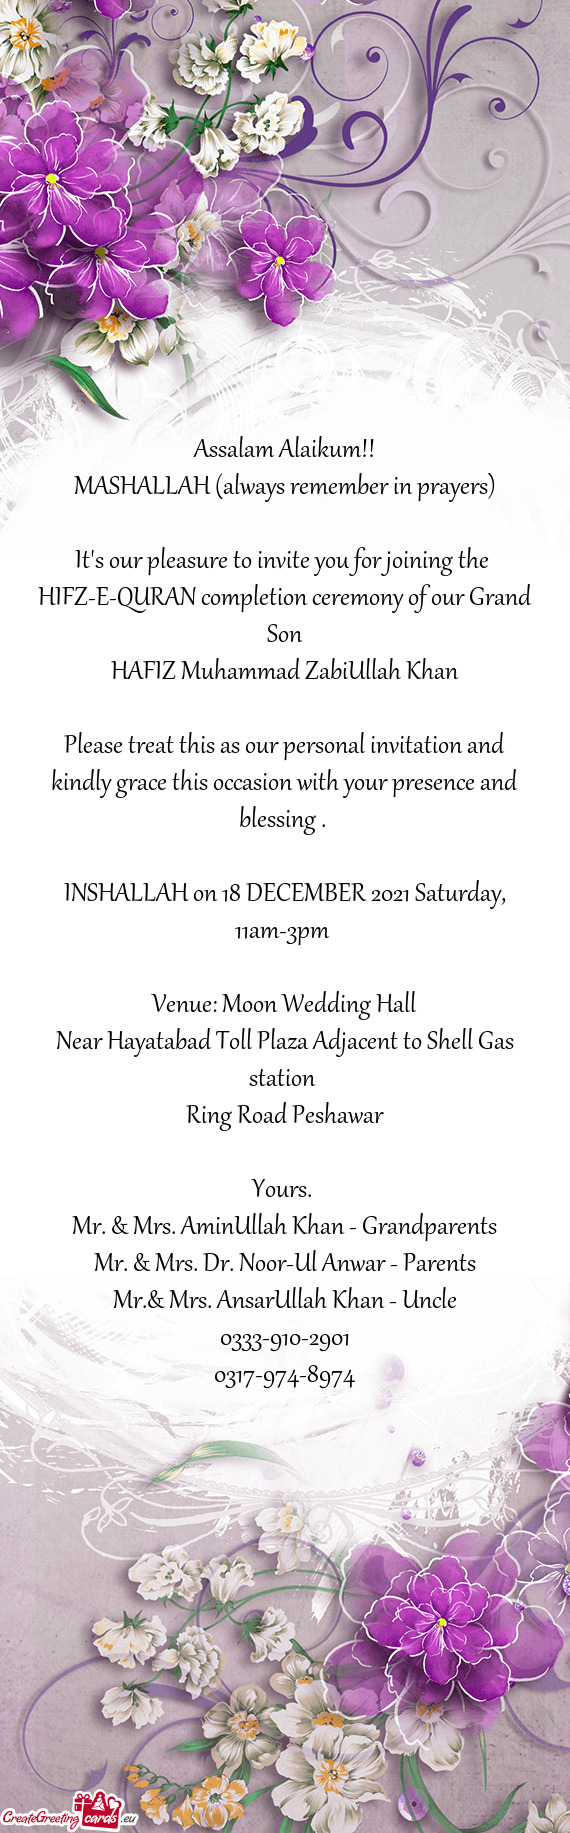 INSHALLAH on 18 DECEMBER 2021 Saturday, 11am-3pm